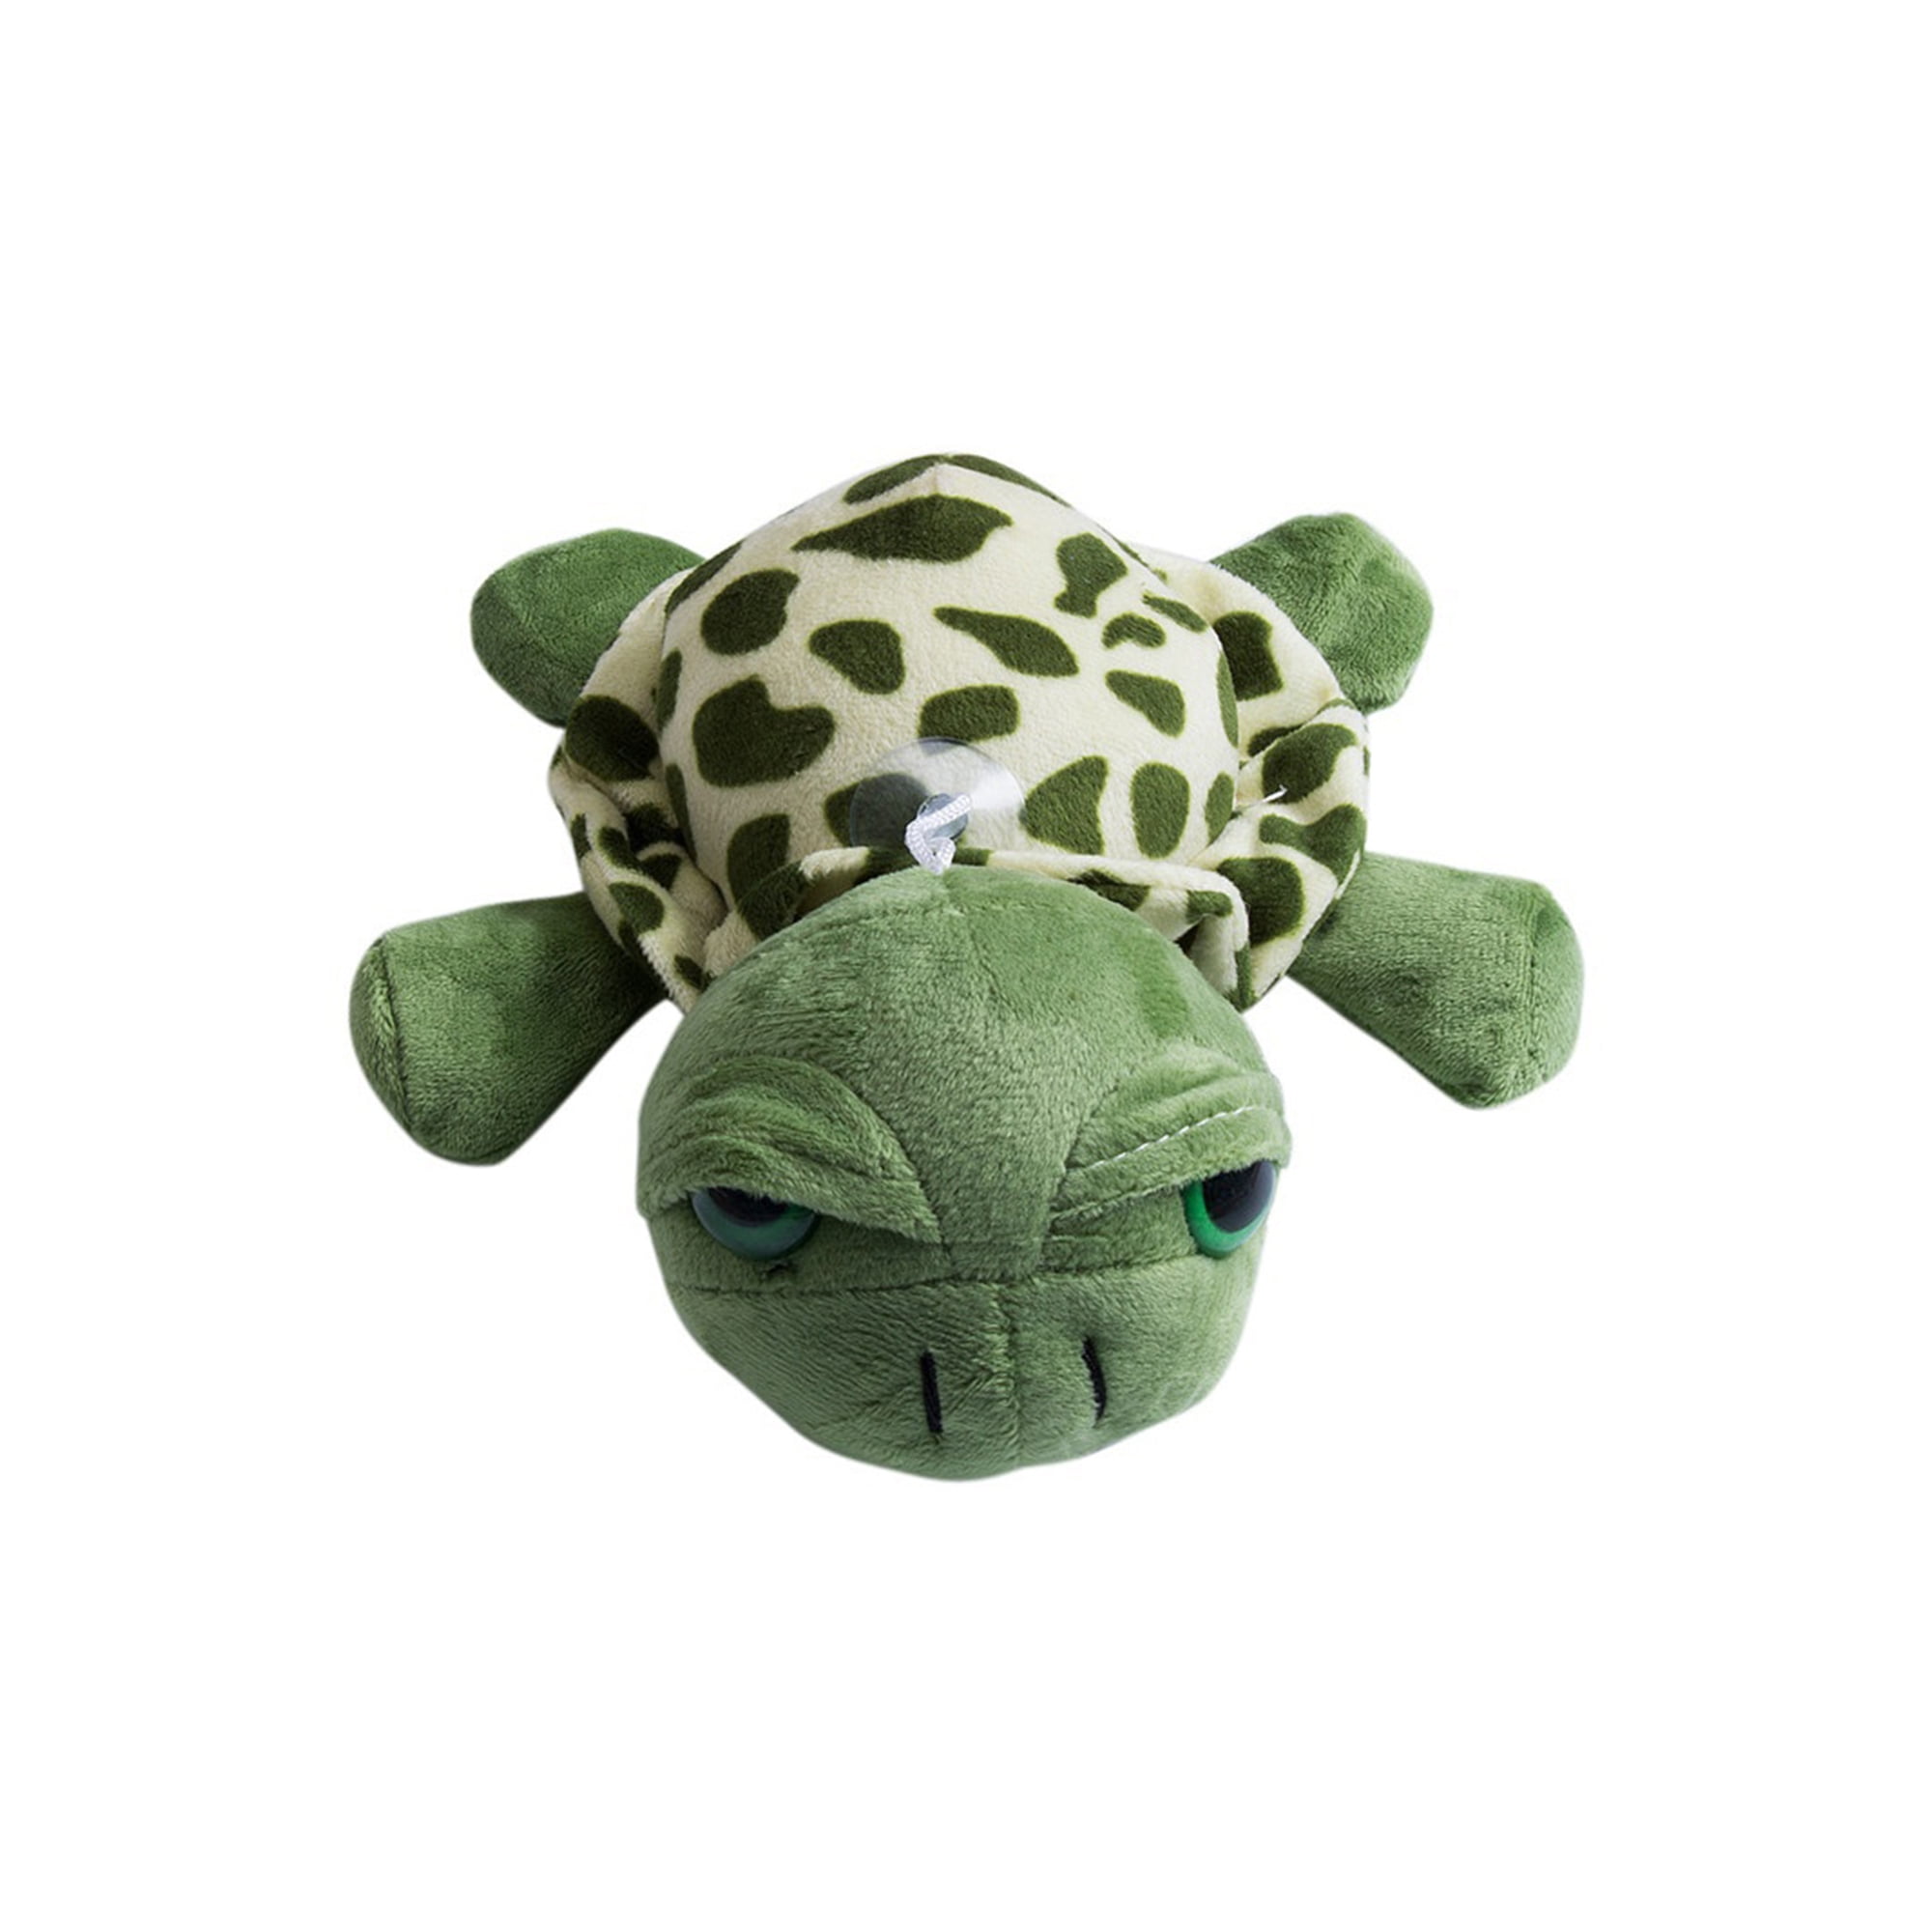 Cute Big Eyes Green Tortoise Turtle Animal Kids stuffed Plush Toys Gift 20CM 